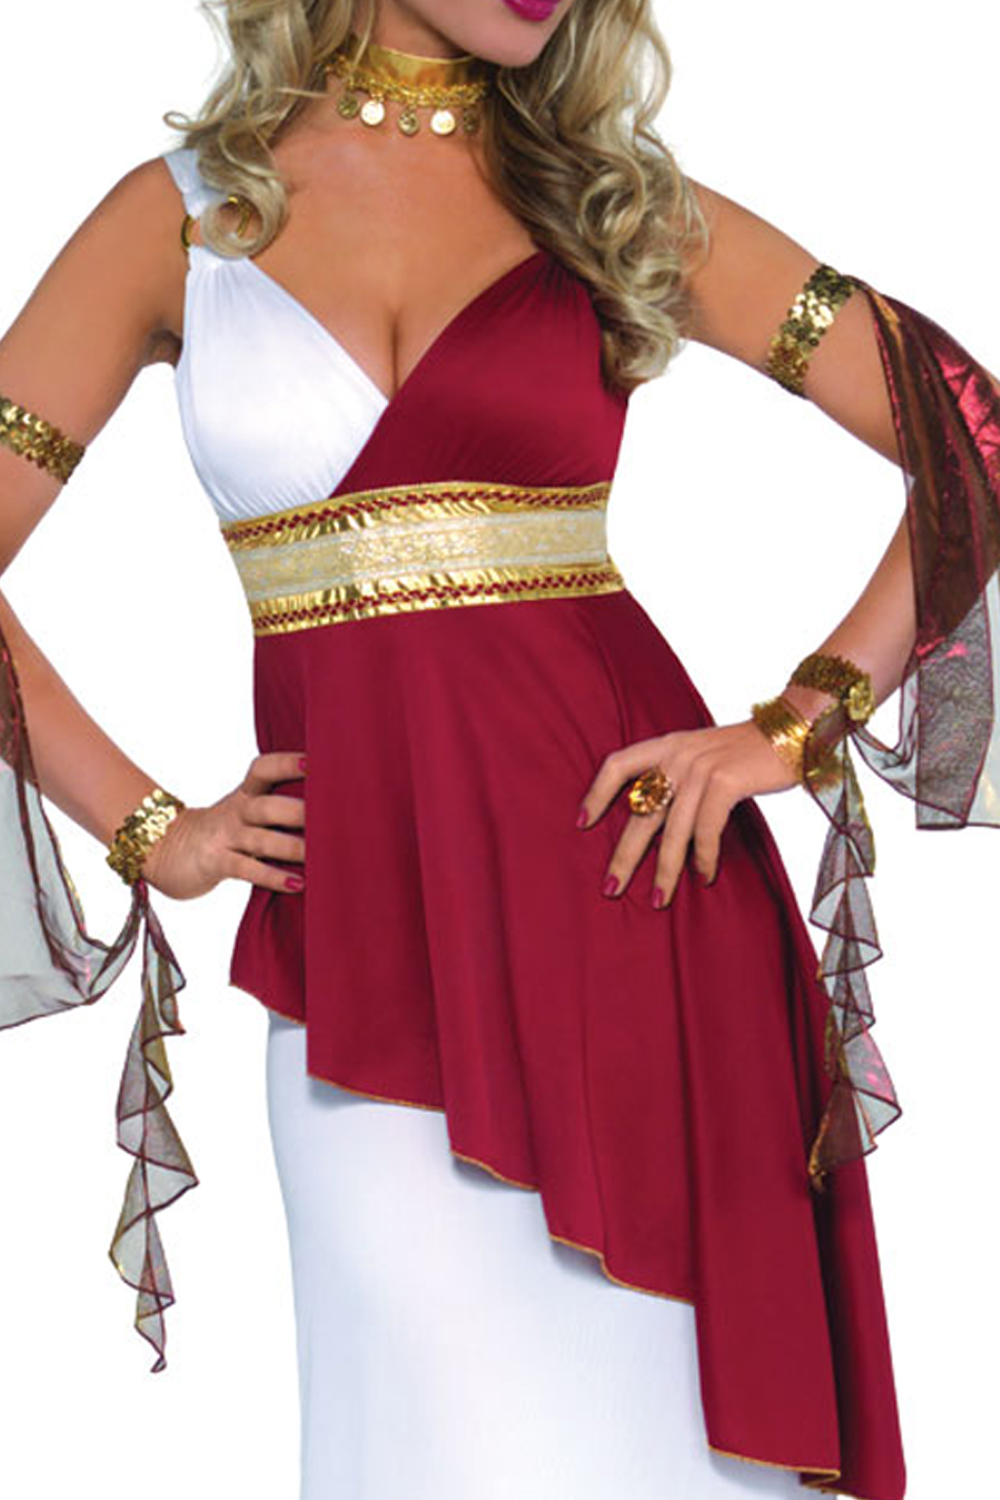 Christys Dress Up Imperial Empress Womens Fancy Dress Costume Roman